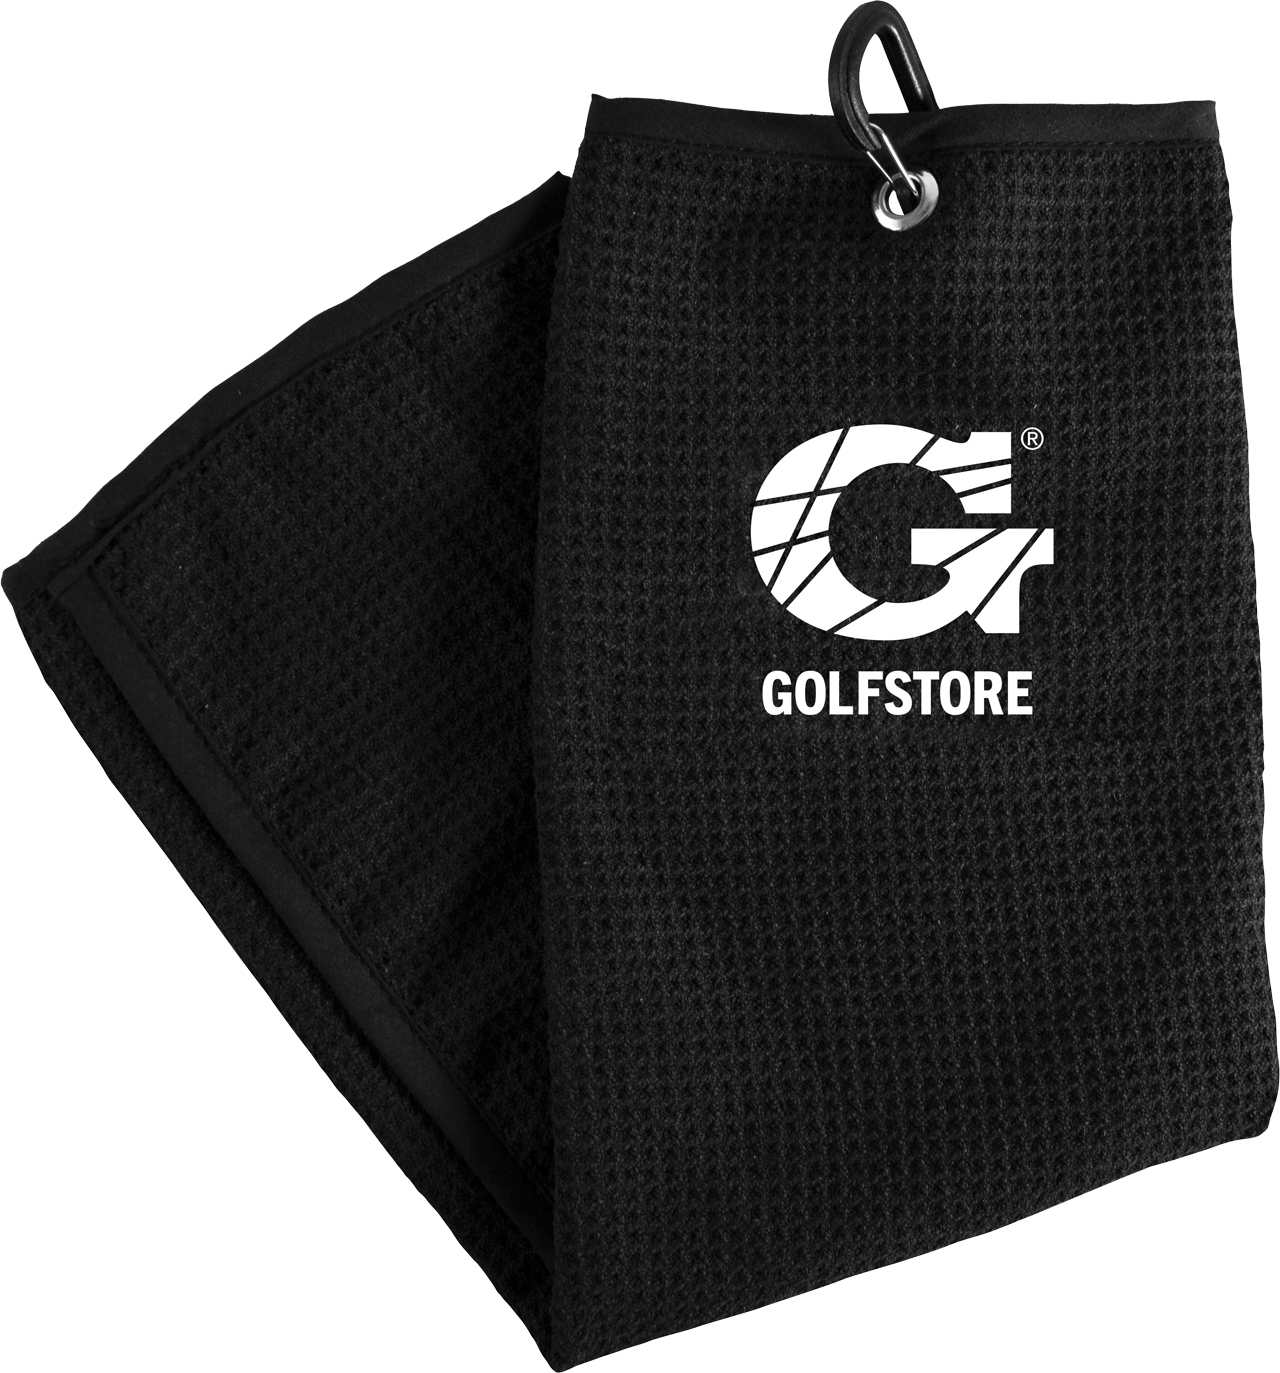 Golfhåndkle med Golfstore-logo - Bk